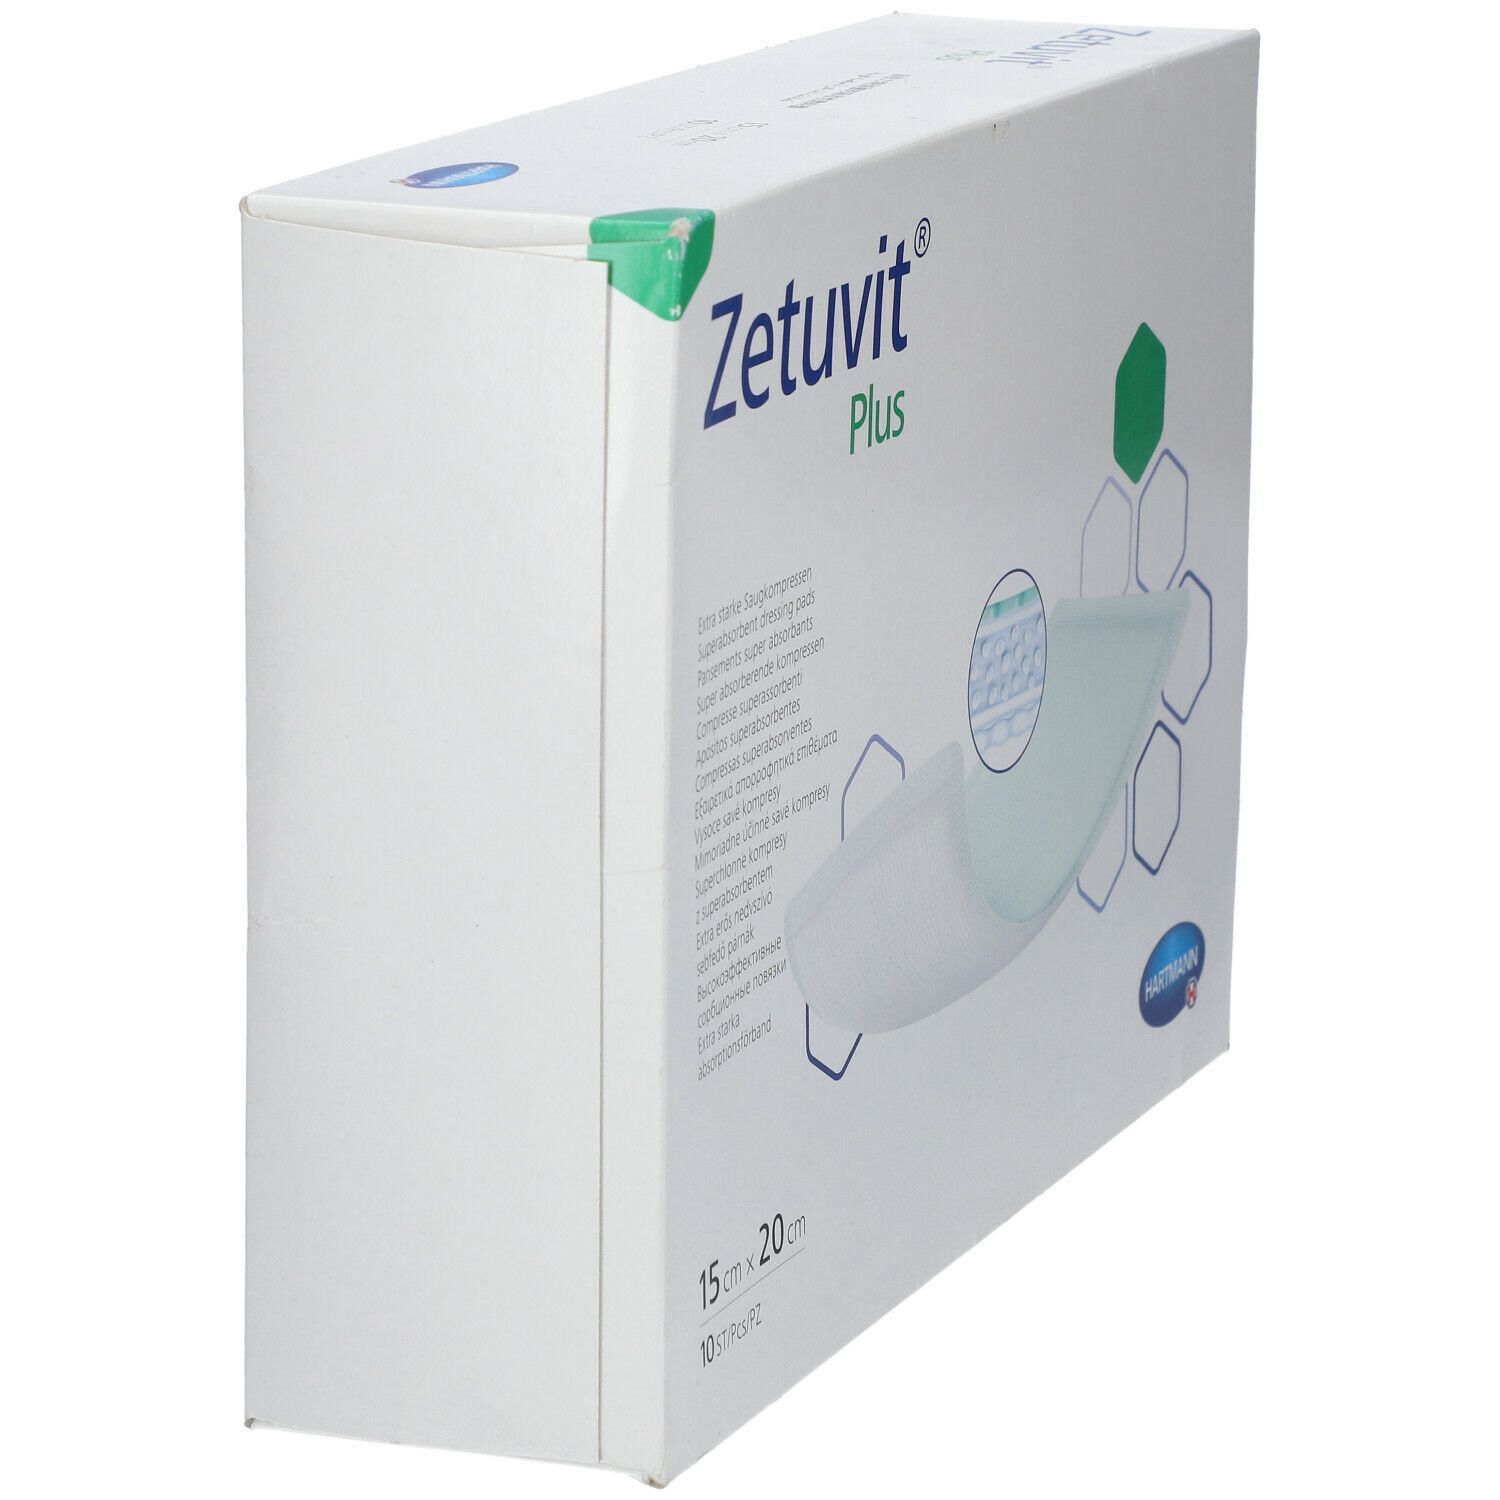 Zetuvit® Plus steril 15 x 20 cm